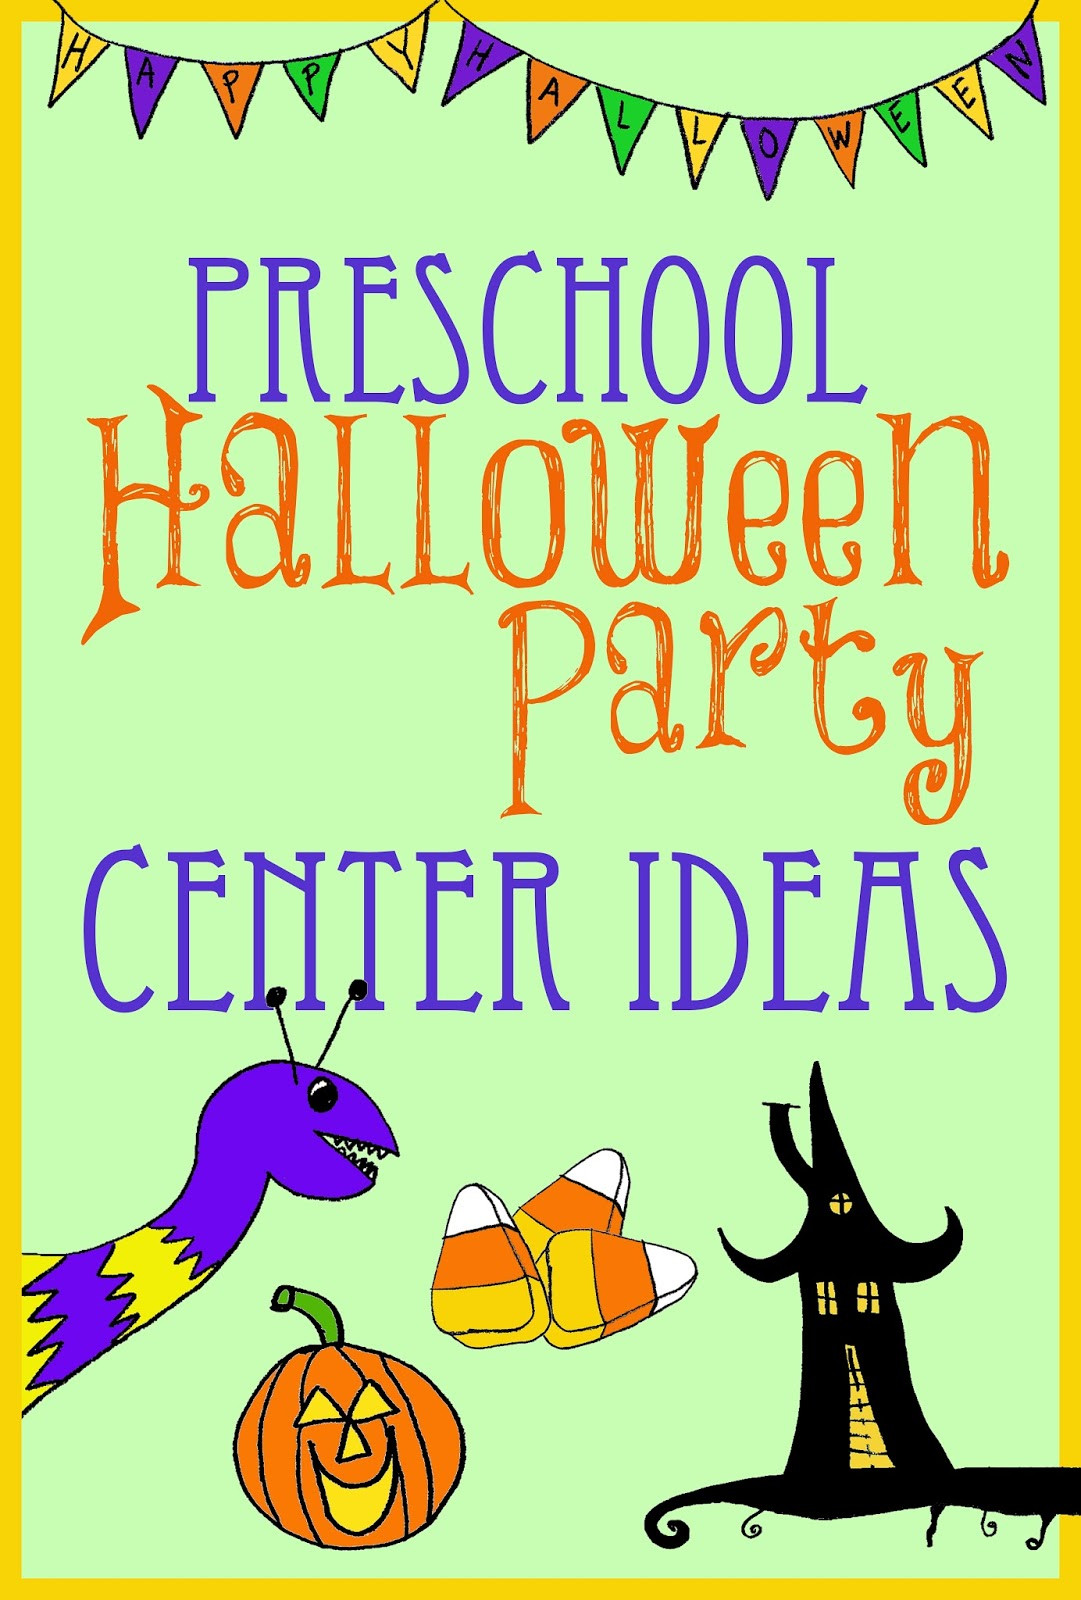 Halloween Classroom Party Ideas Kindergarten
 Halloween Party Center Ideas for Preschool Kindergarten